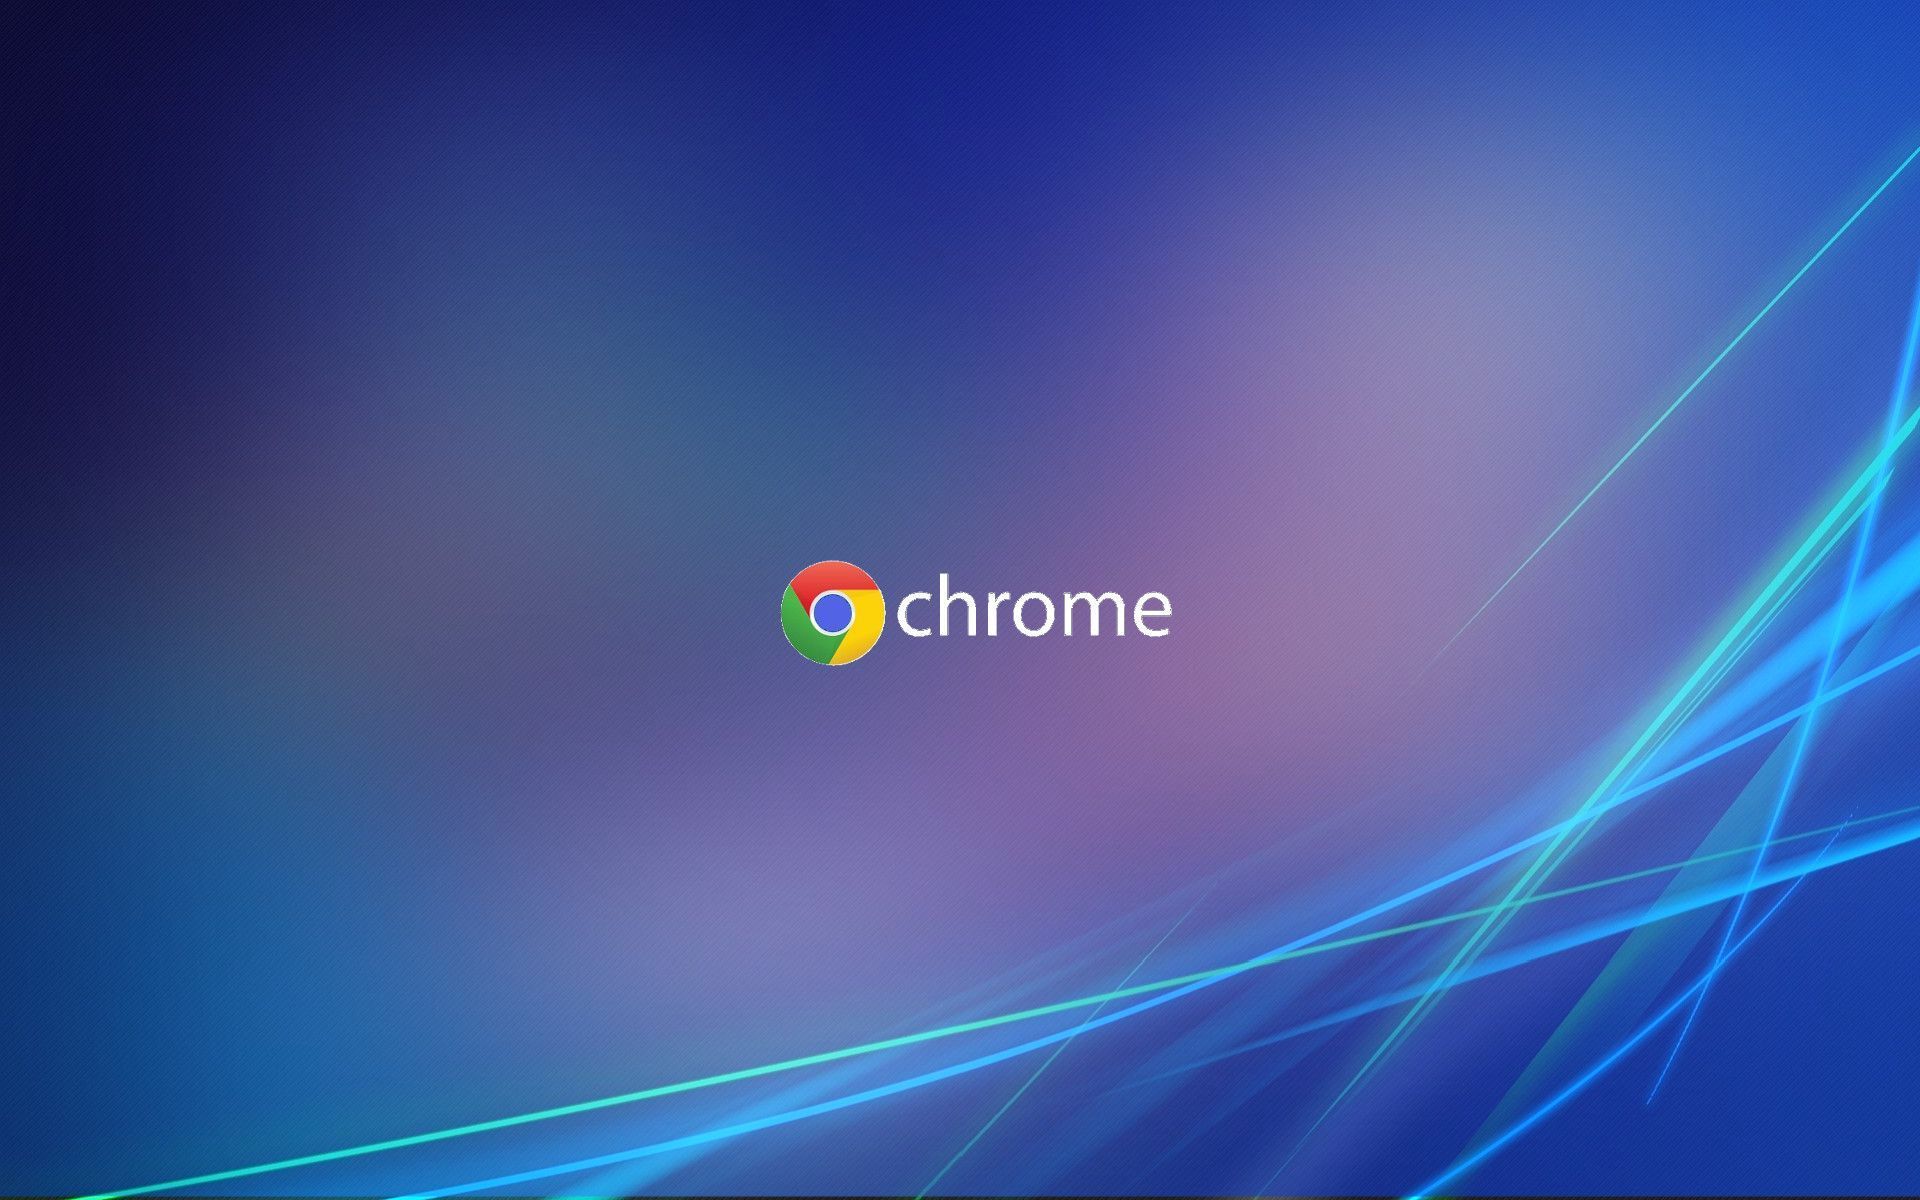 Chrome logo on a blue background - Chromebook